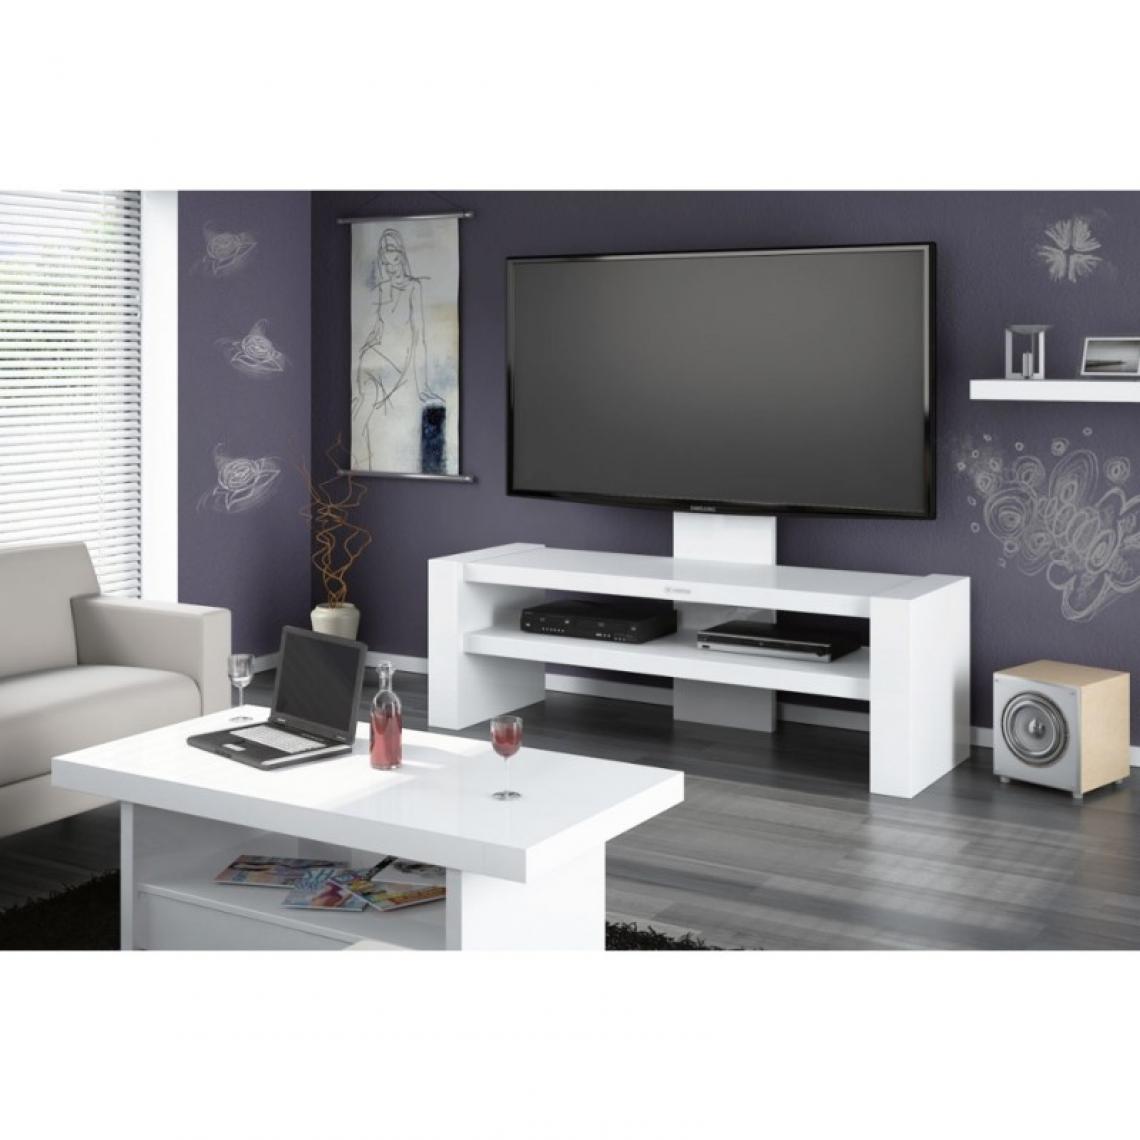 Carellia - Meuble TV design laqué 138 cm x 47 cm x 118 cm - Blanc - Meubles TV, Hi-Fi